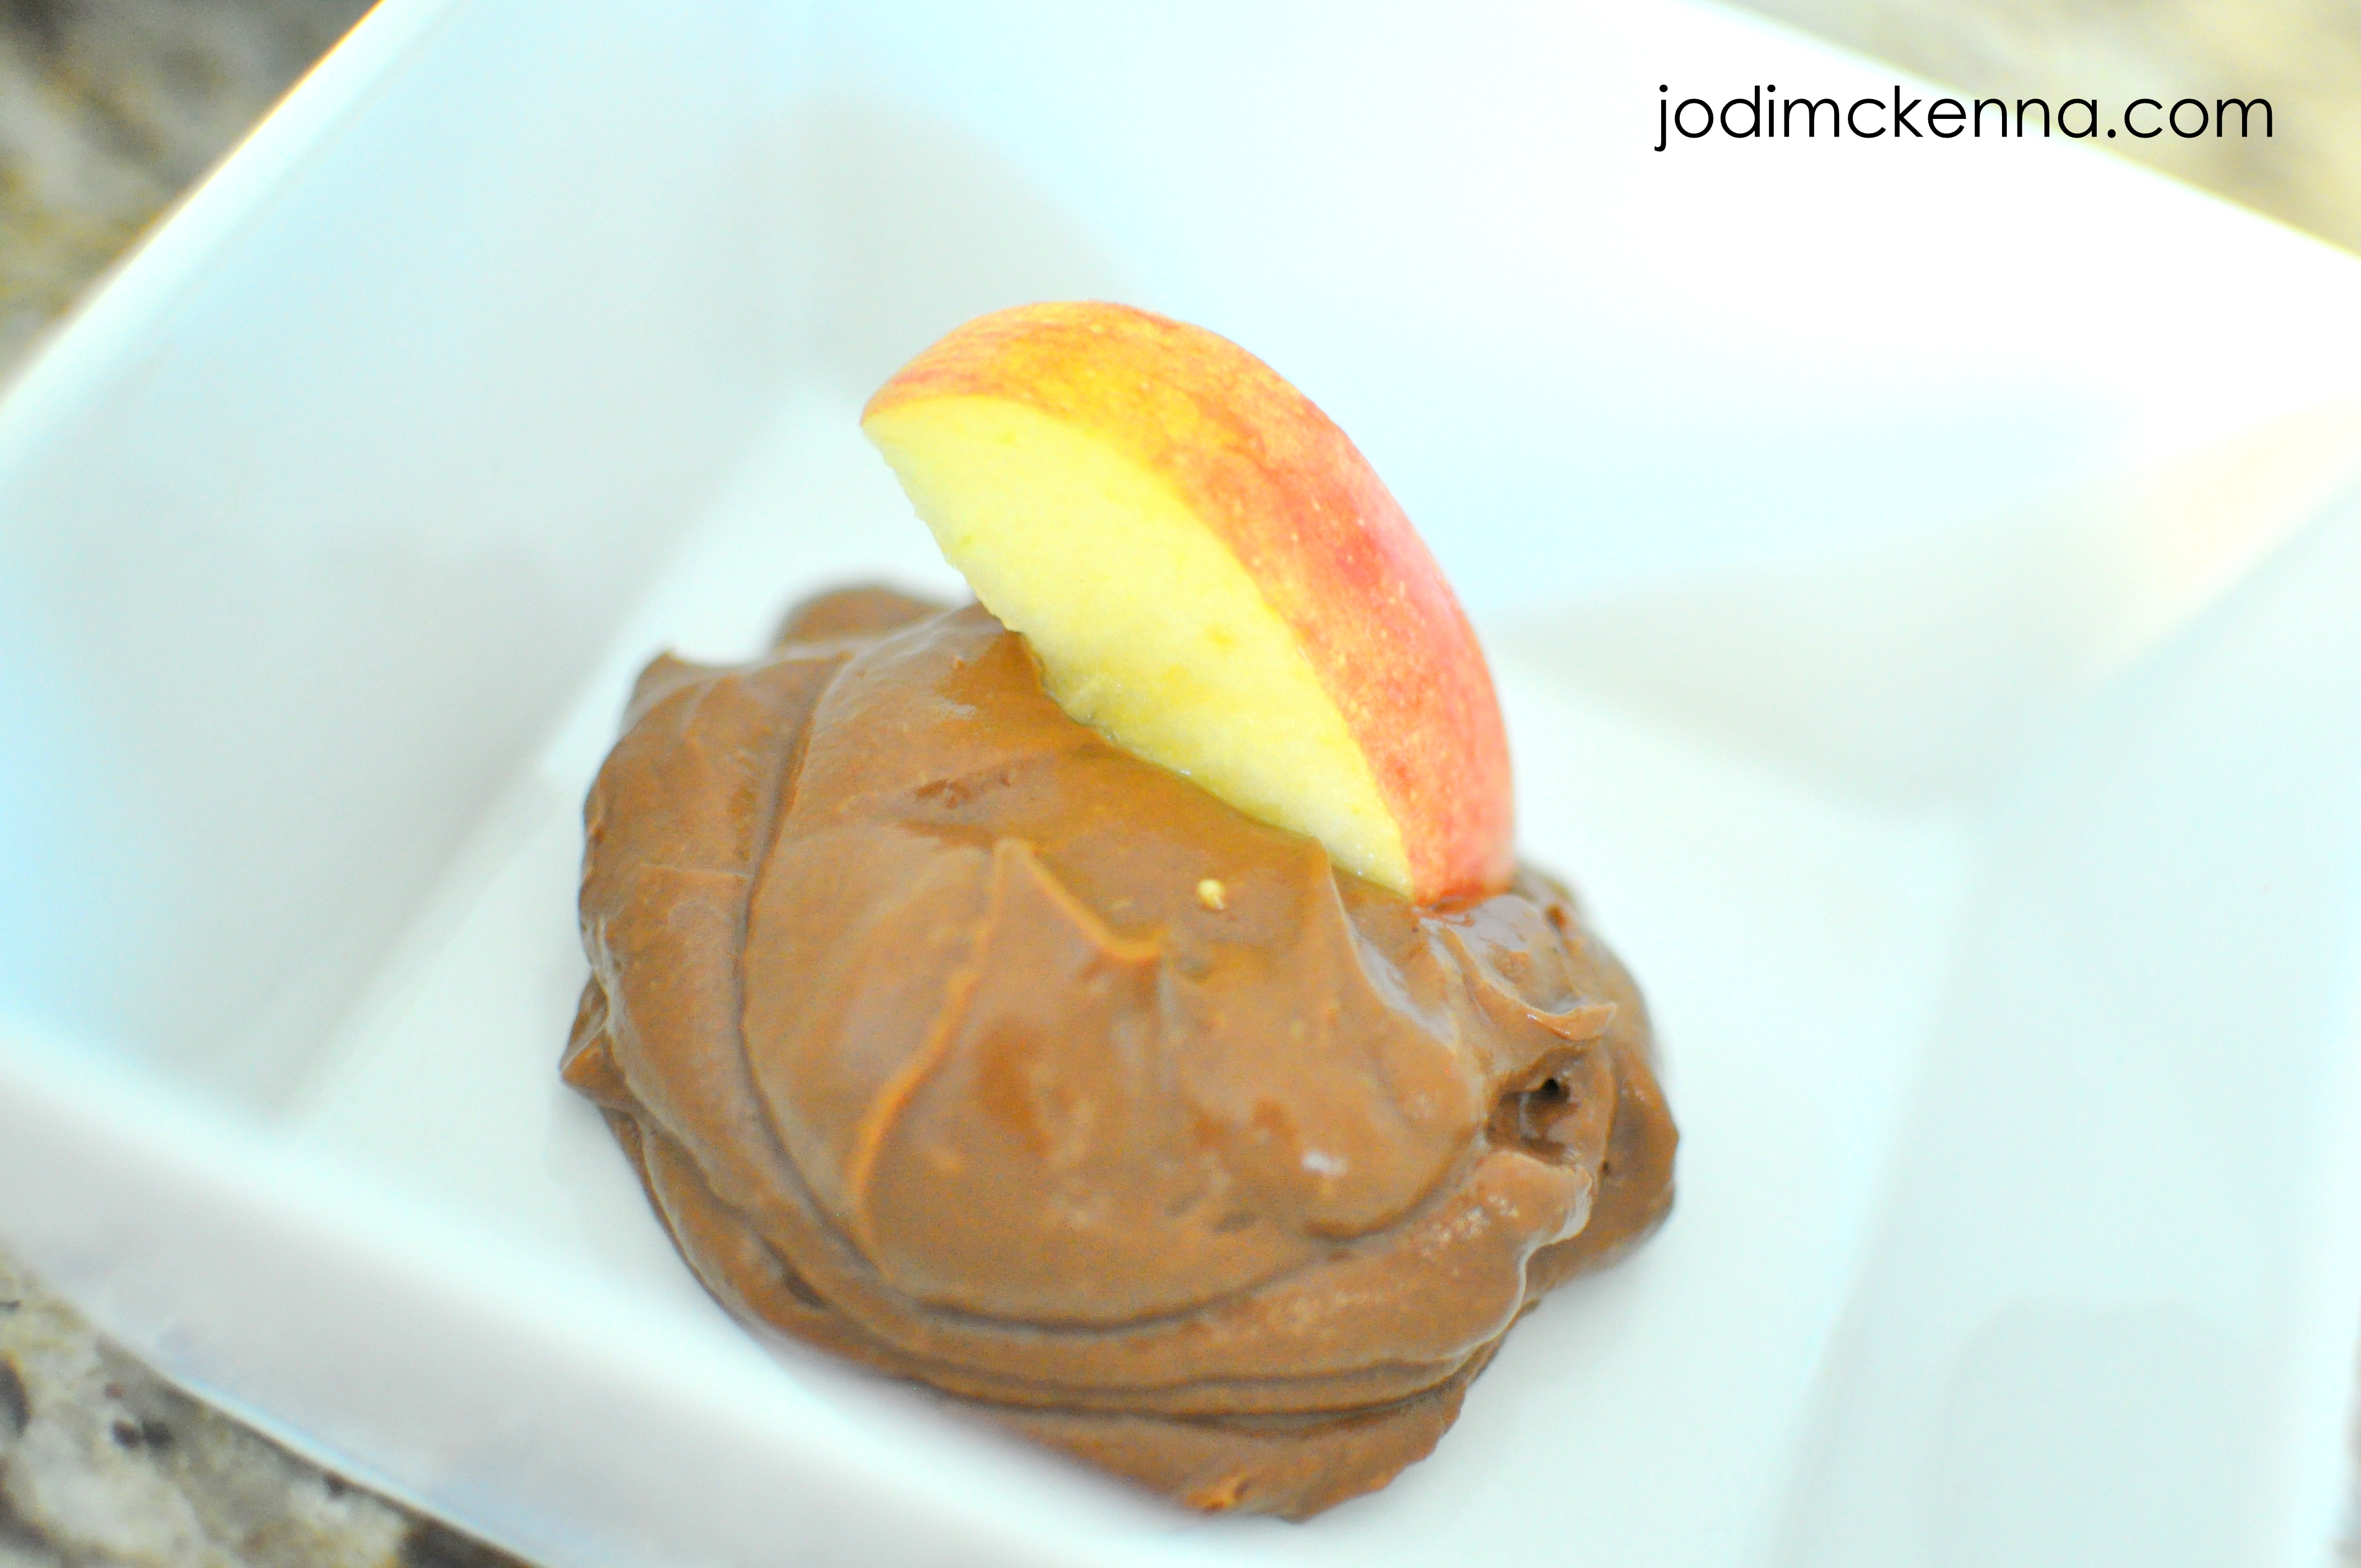 chocolate avacado pudding with apples